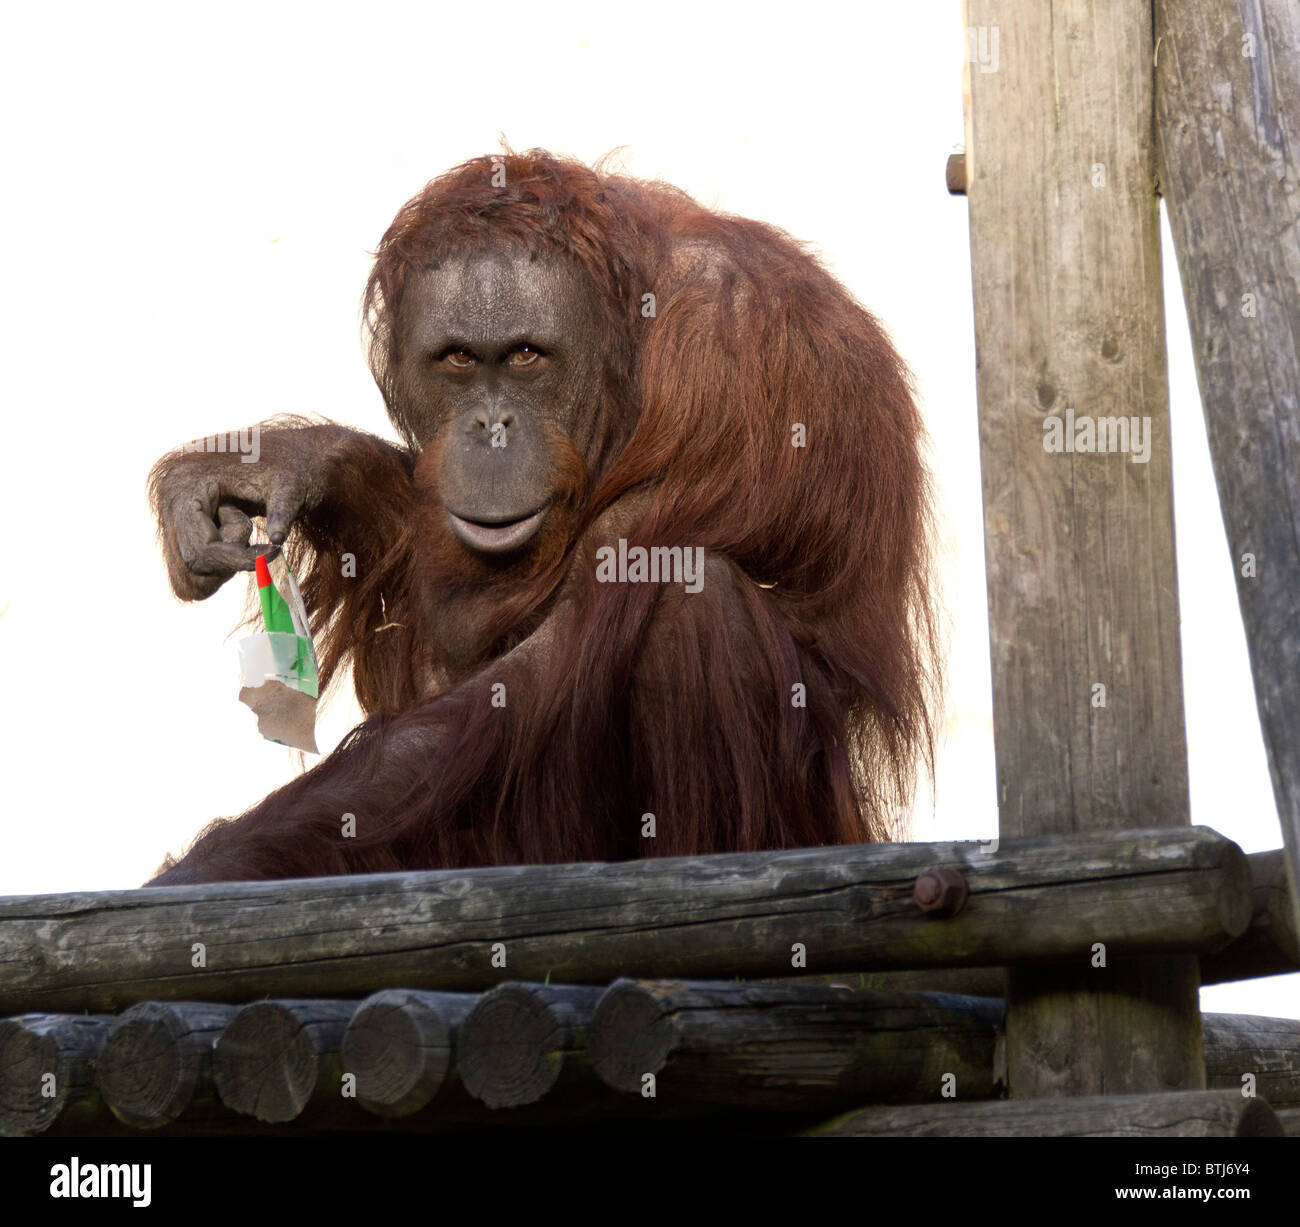 Dudley Zoo West Midlands UK - orang-utang examining waste rubbish blown into enclosure Stock Photo